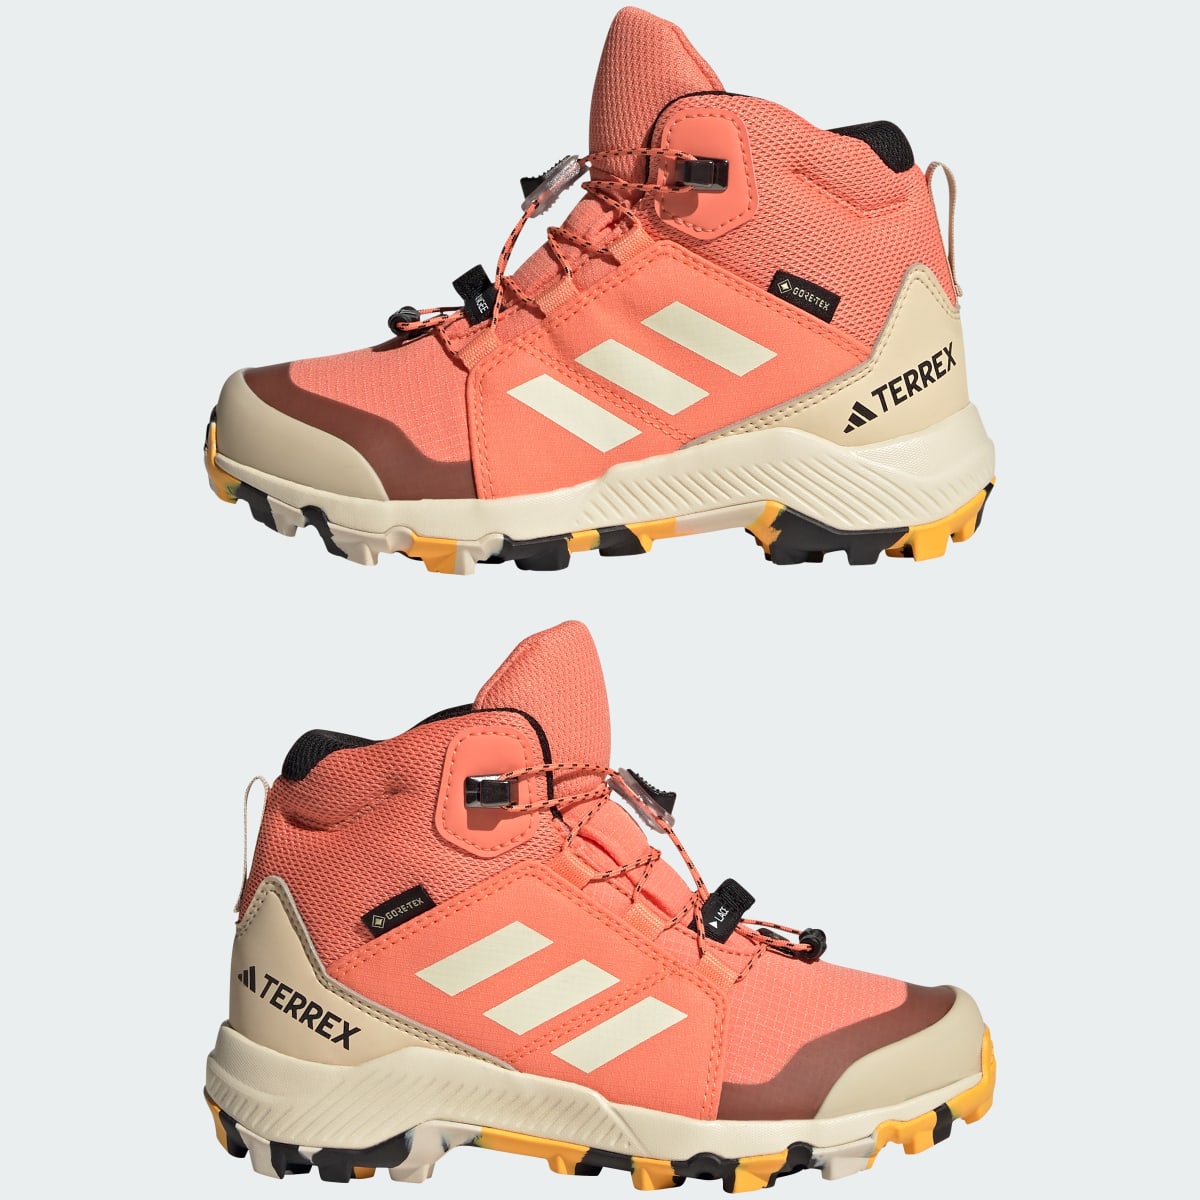 Adidas Chaussure de randonnée Organizer Mid GORE-TEX. 9